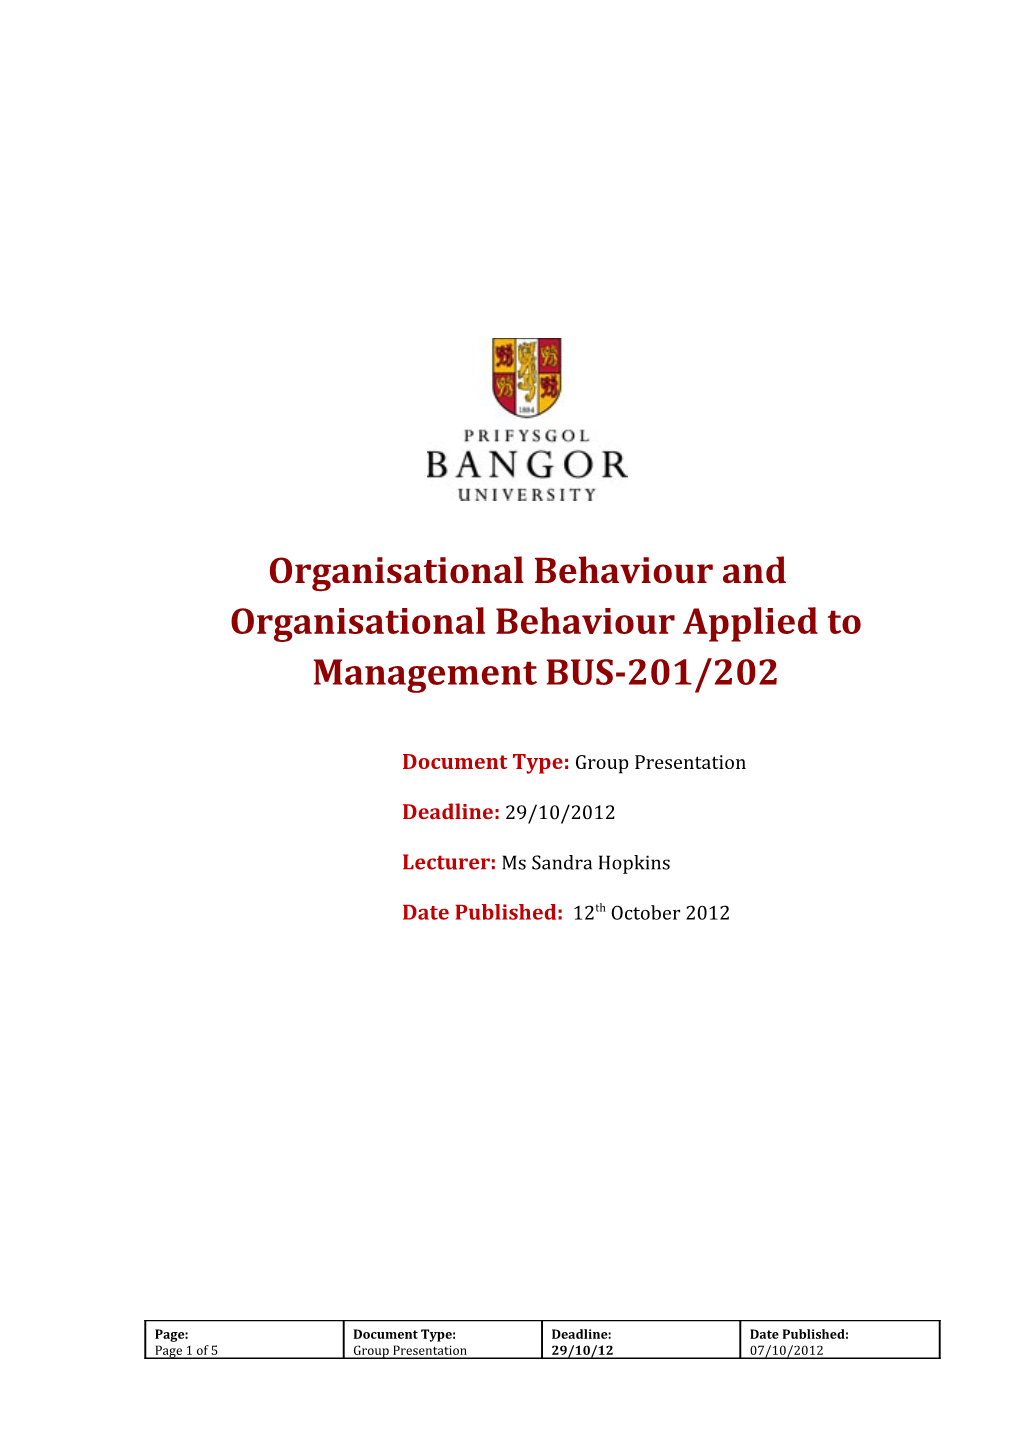 Organisational Behaviour and Organisational Behaviour Applied to Management BUS-201/202